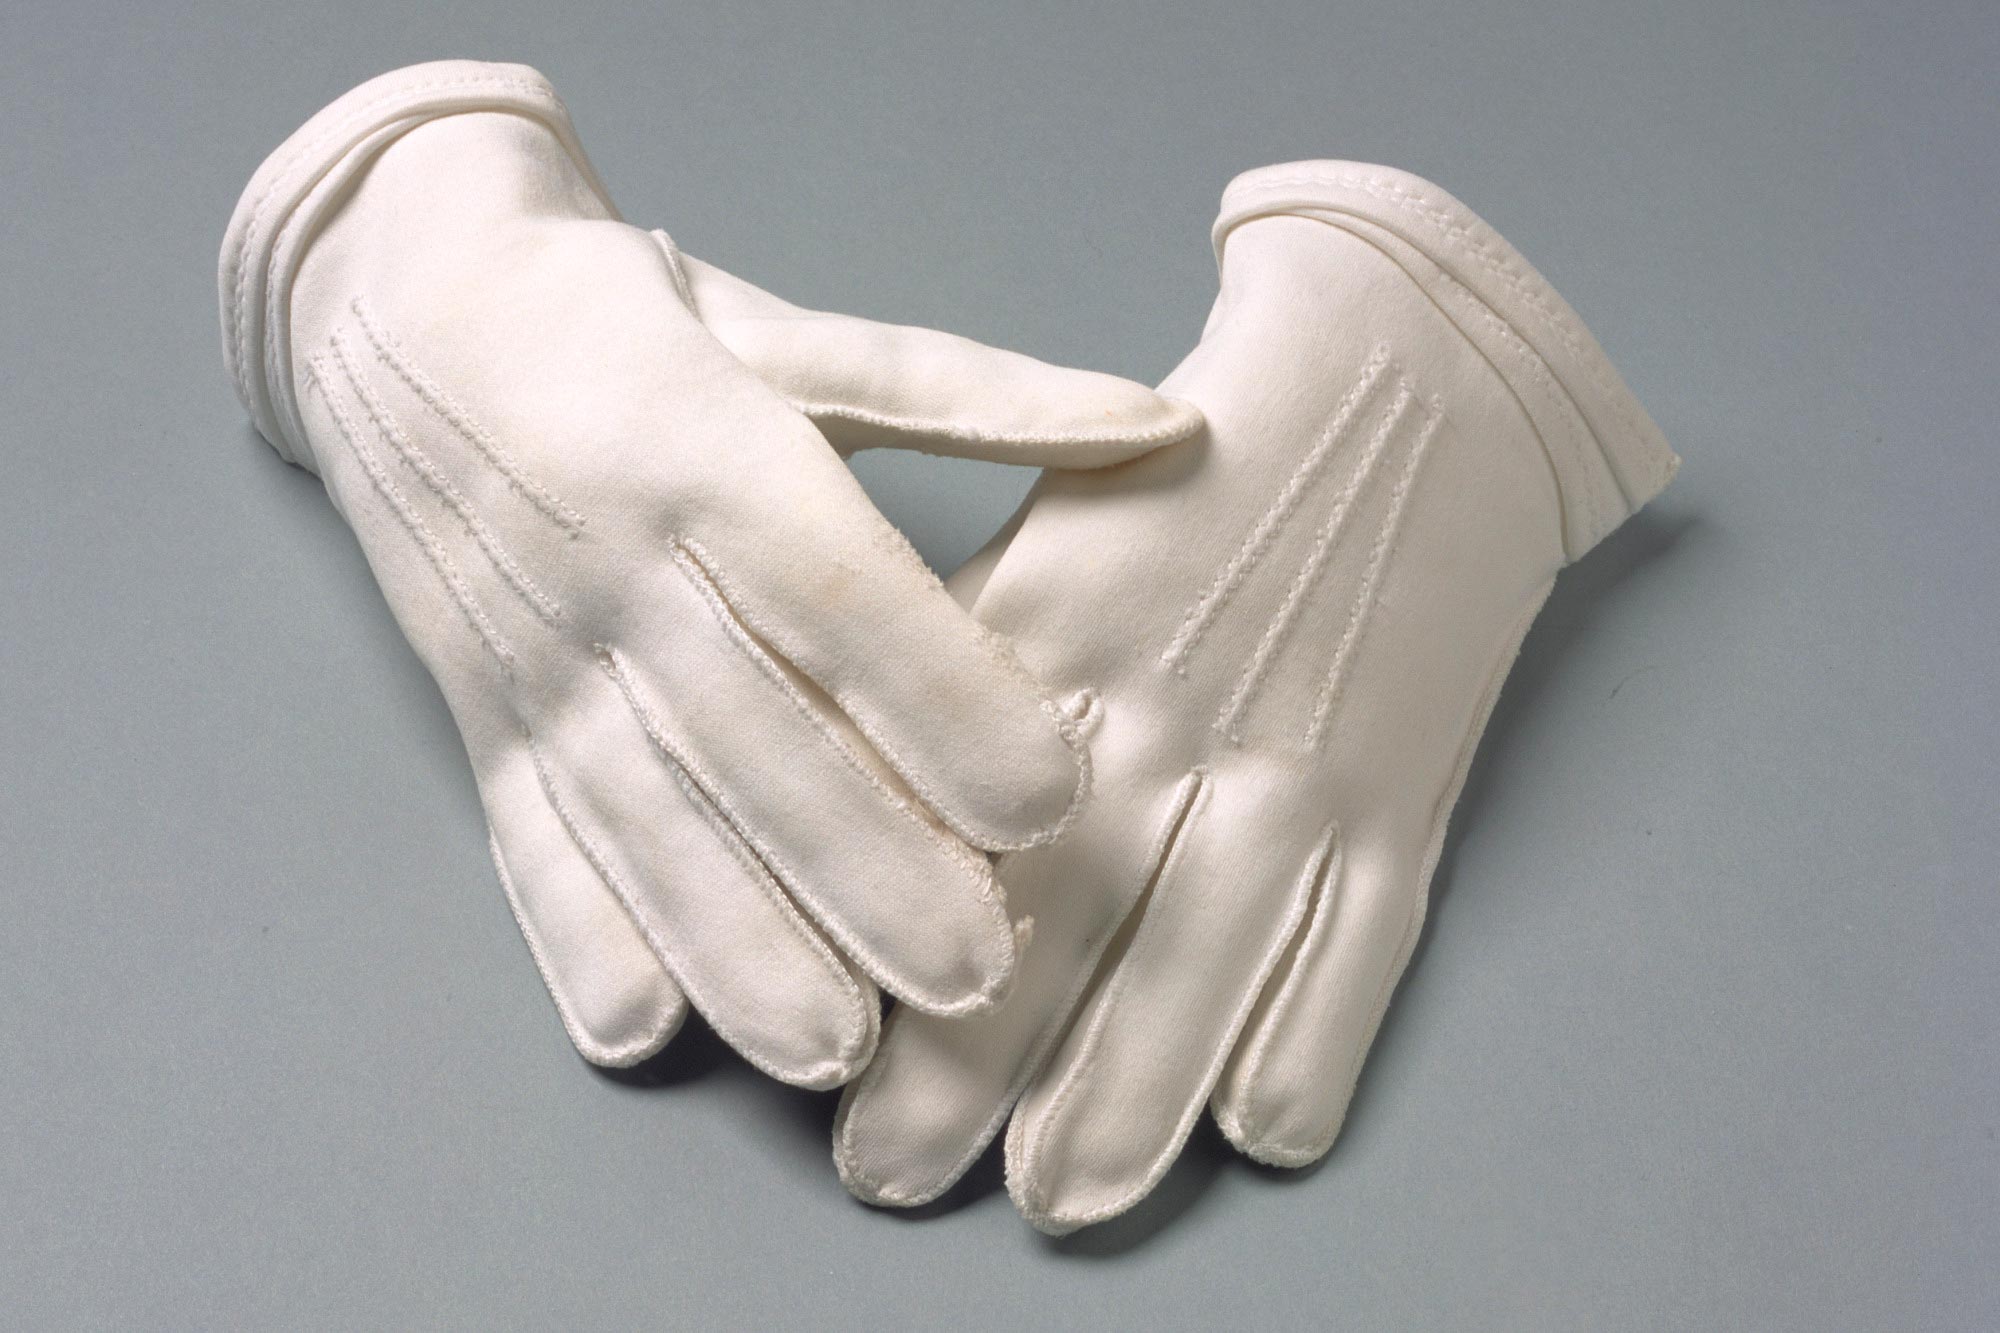 Pair of short white cotton gloves worn by Aboriginal rights activist Faith Bandler.